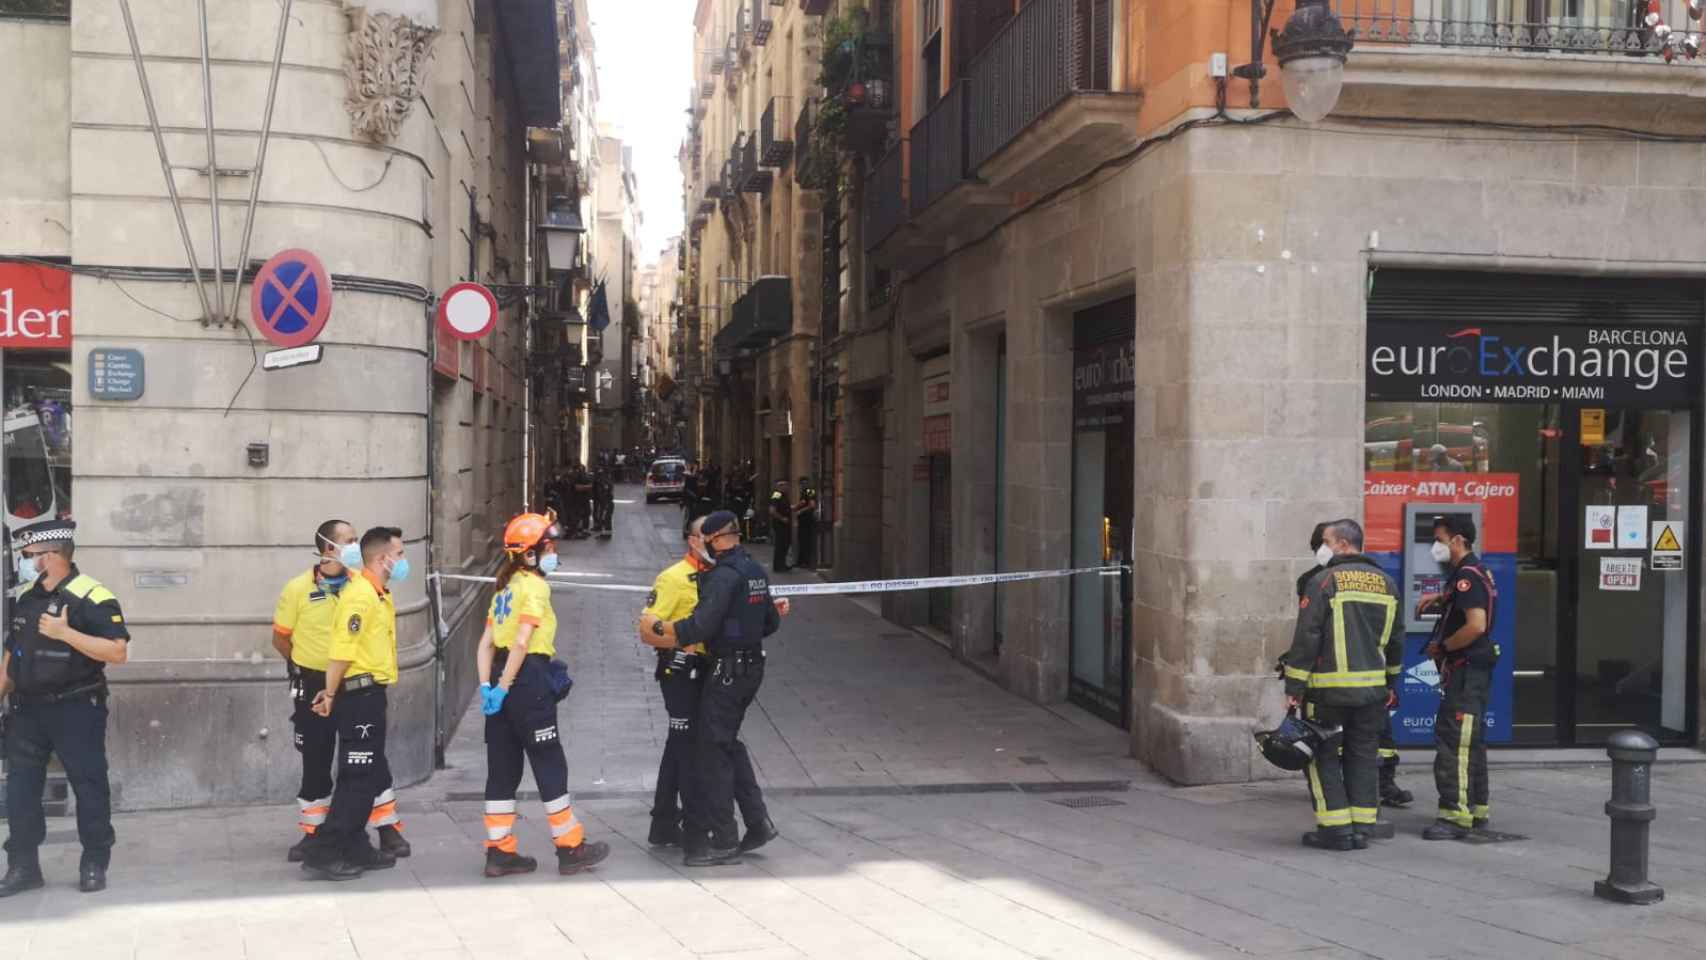 Cordón policial en el centro de Barcelona / GUILLEM ANDRÉS